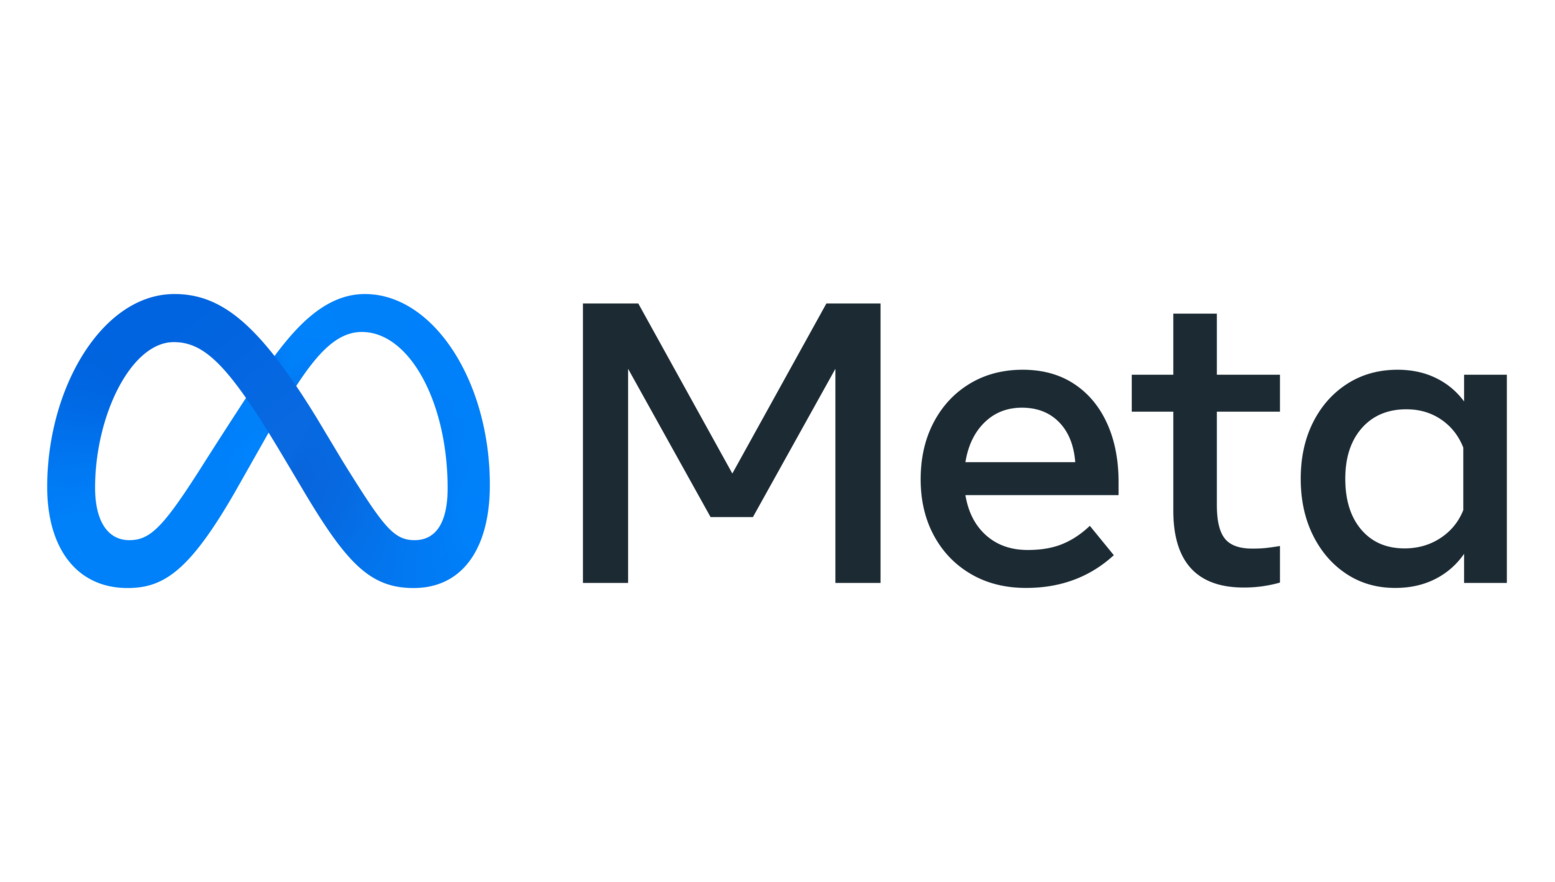 Facebook is now called Meta